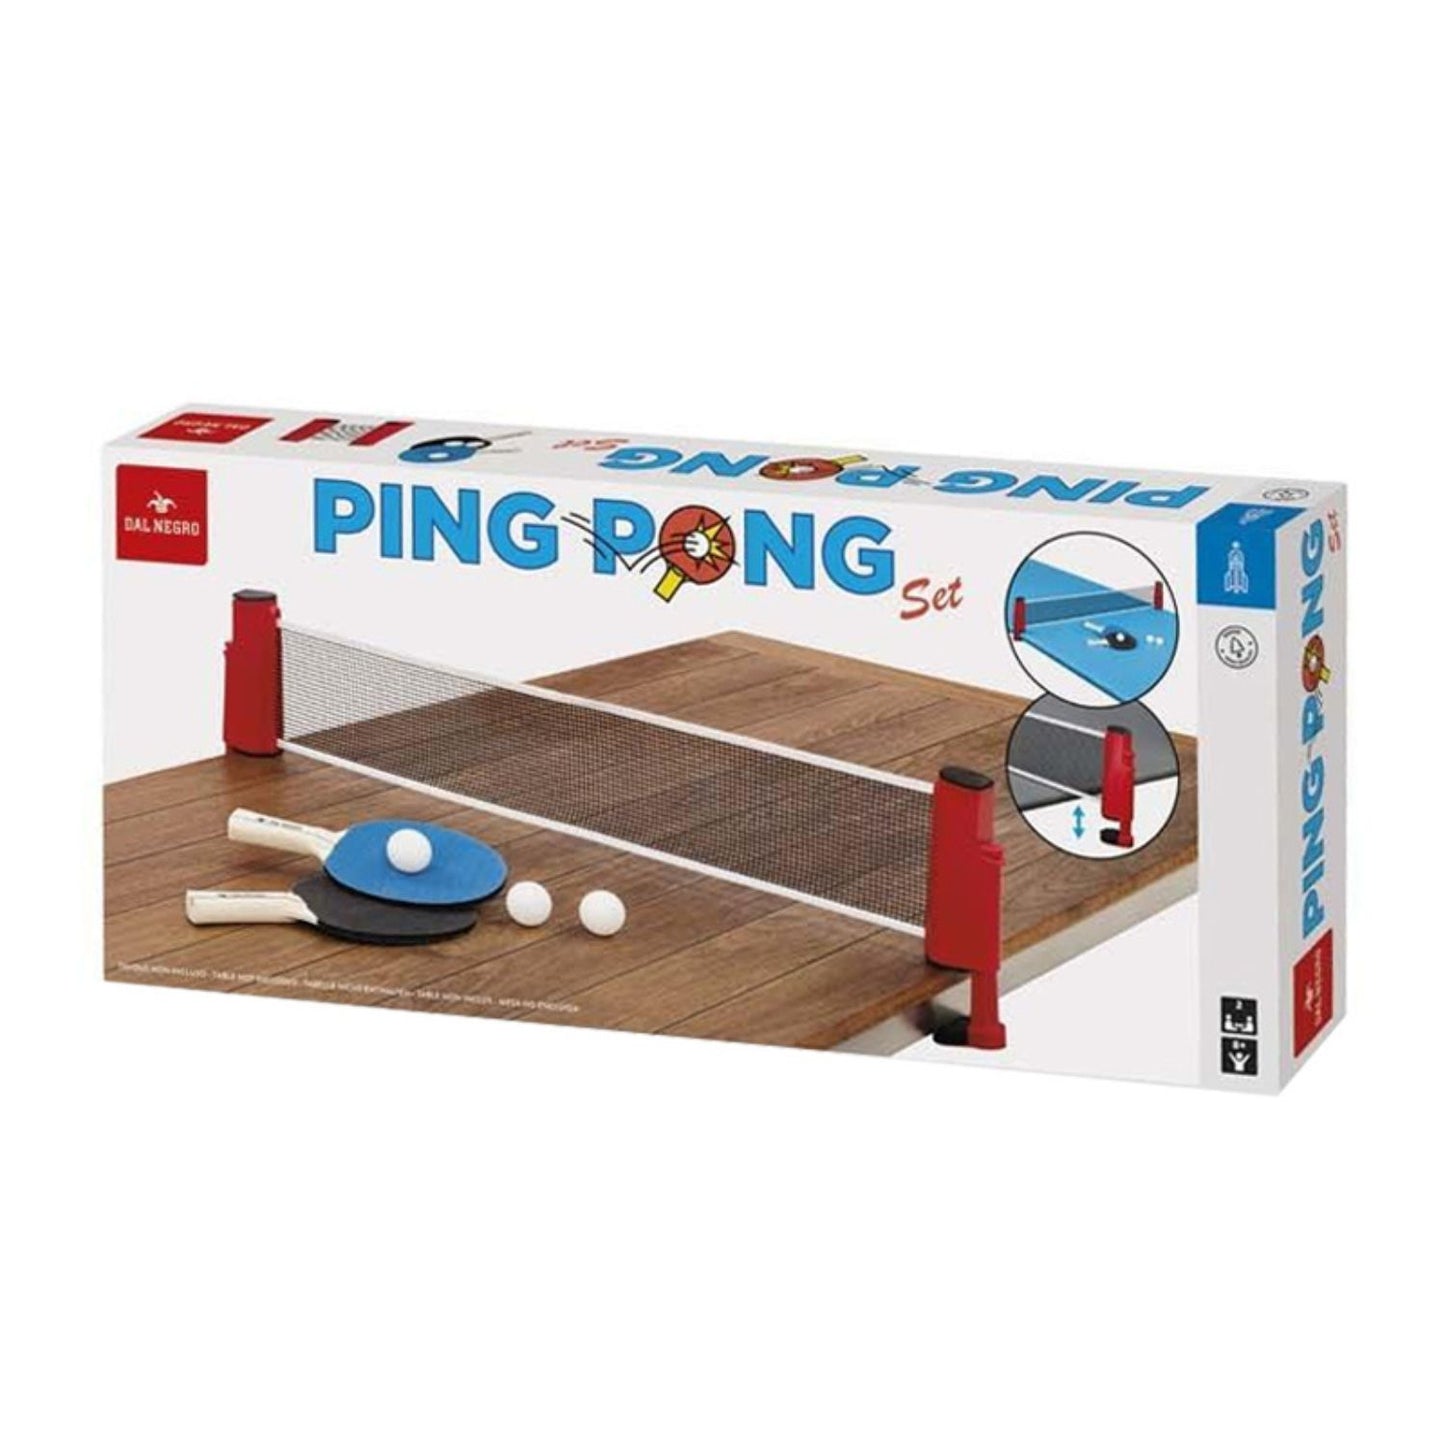 Dal Negro - Ping Pong Set